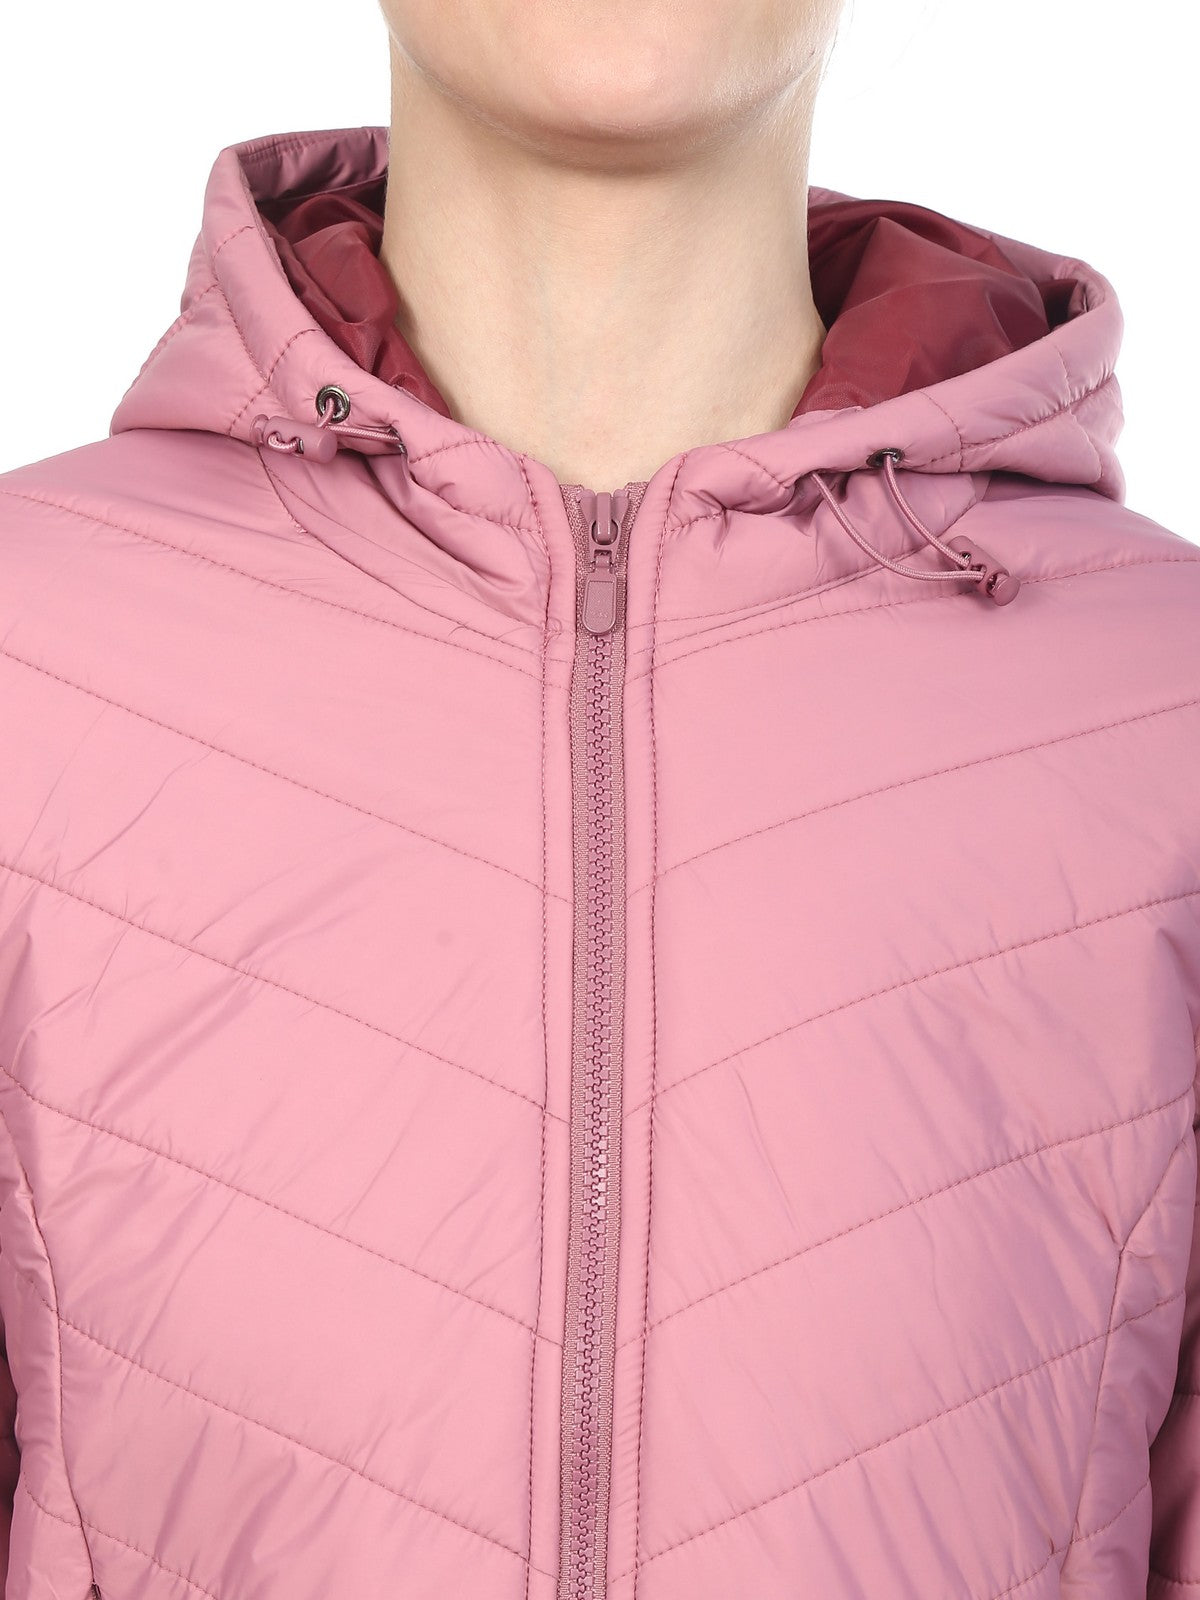 Acne Studios Puffer Jacket in Blush Pink | FWRD